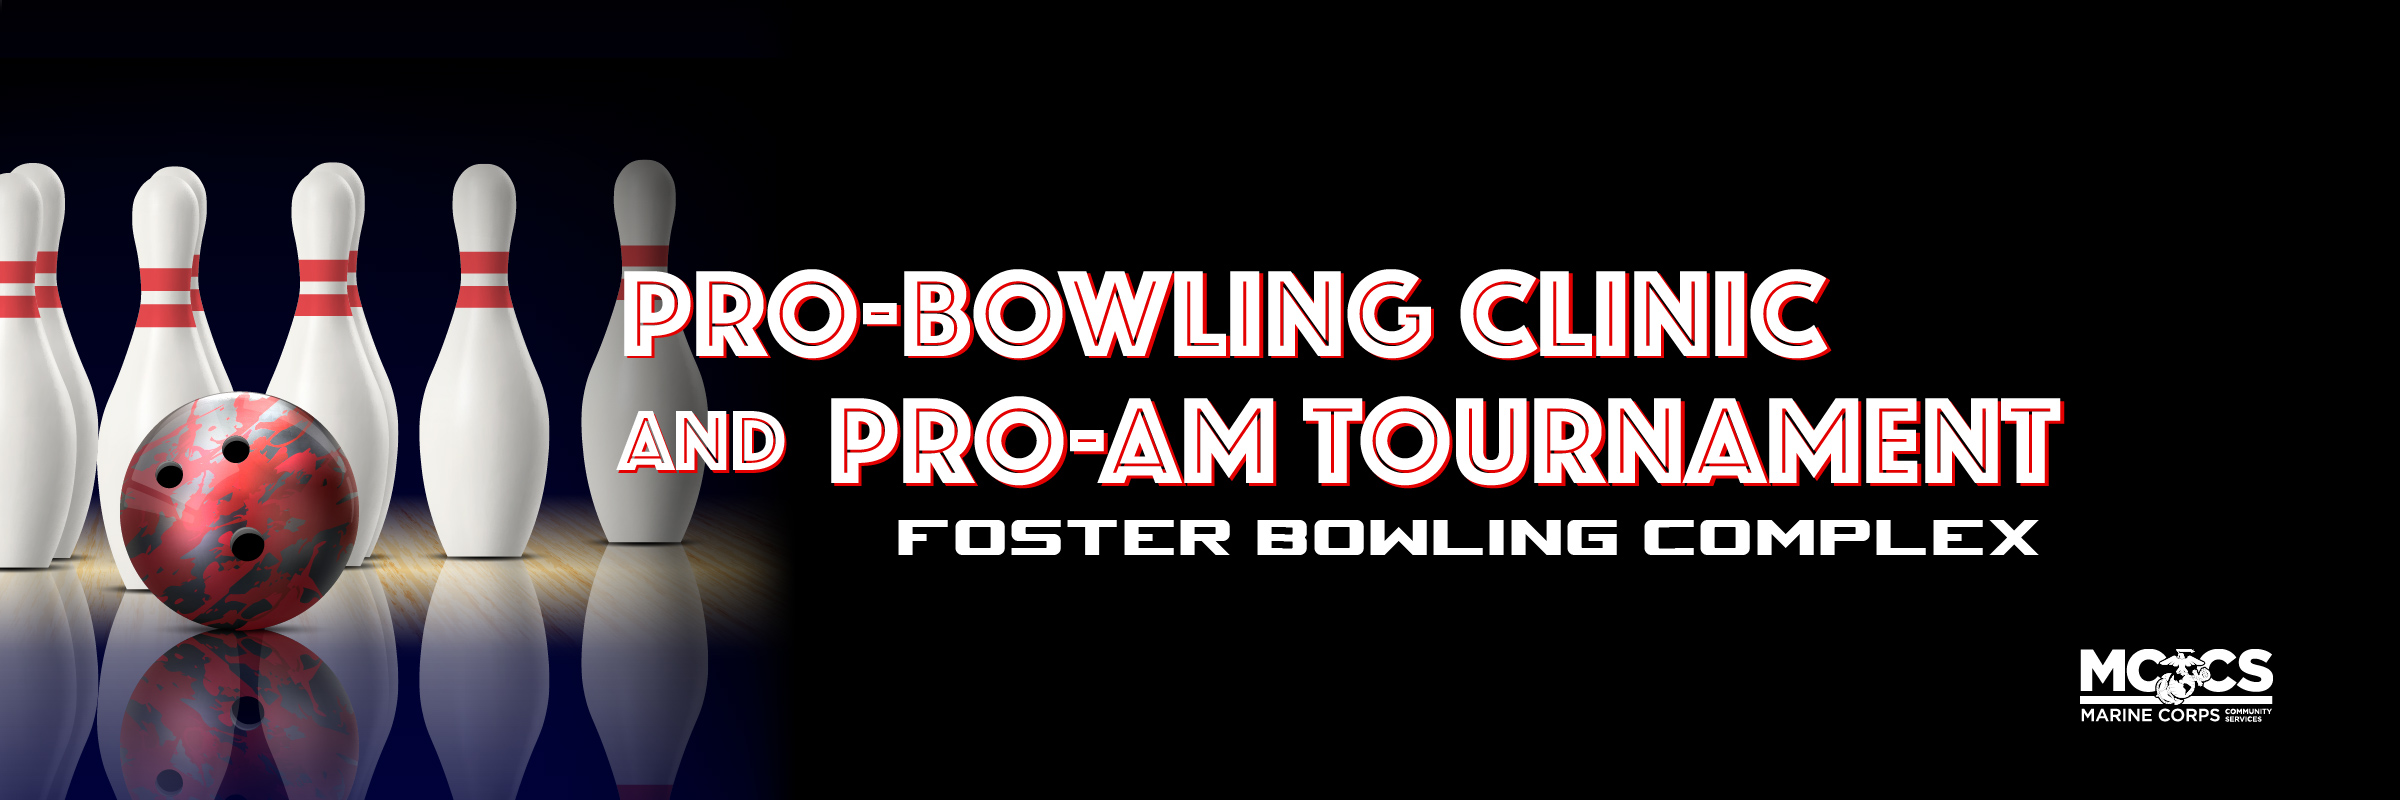 24-0165 Pro-Bowling Clinic and Pro-Am Tournament_Website Desktop Carousel.jpg